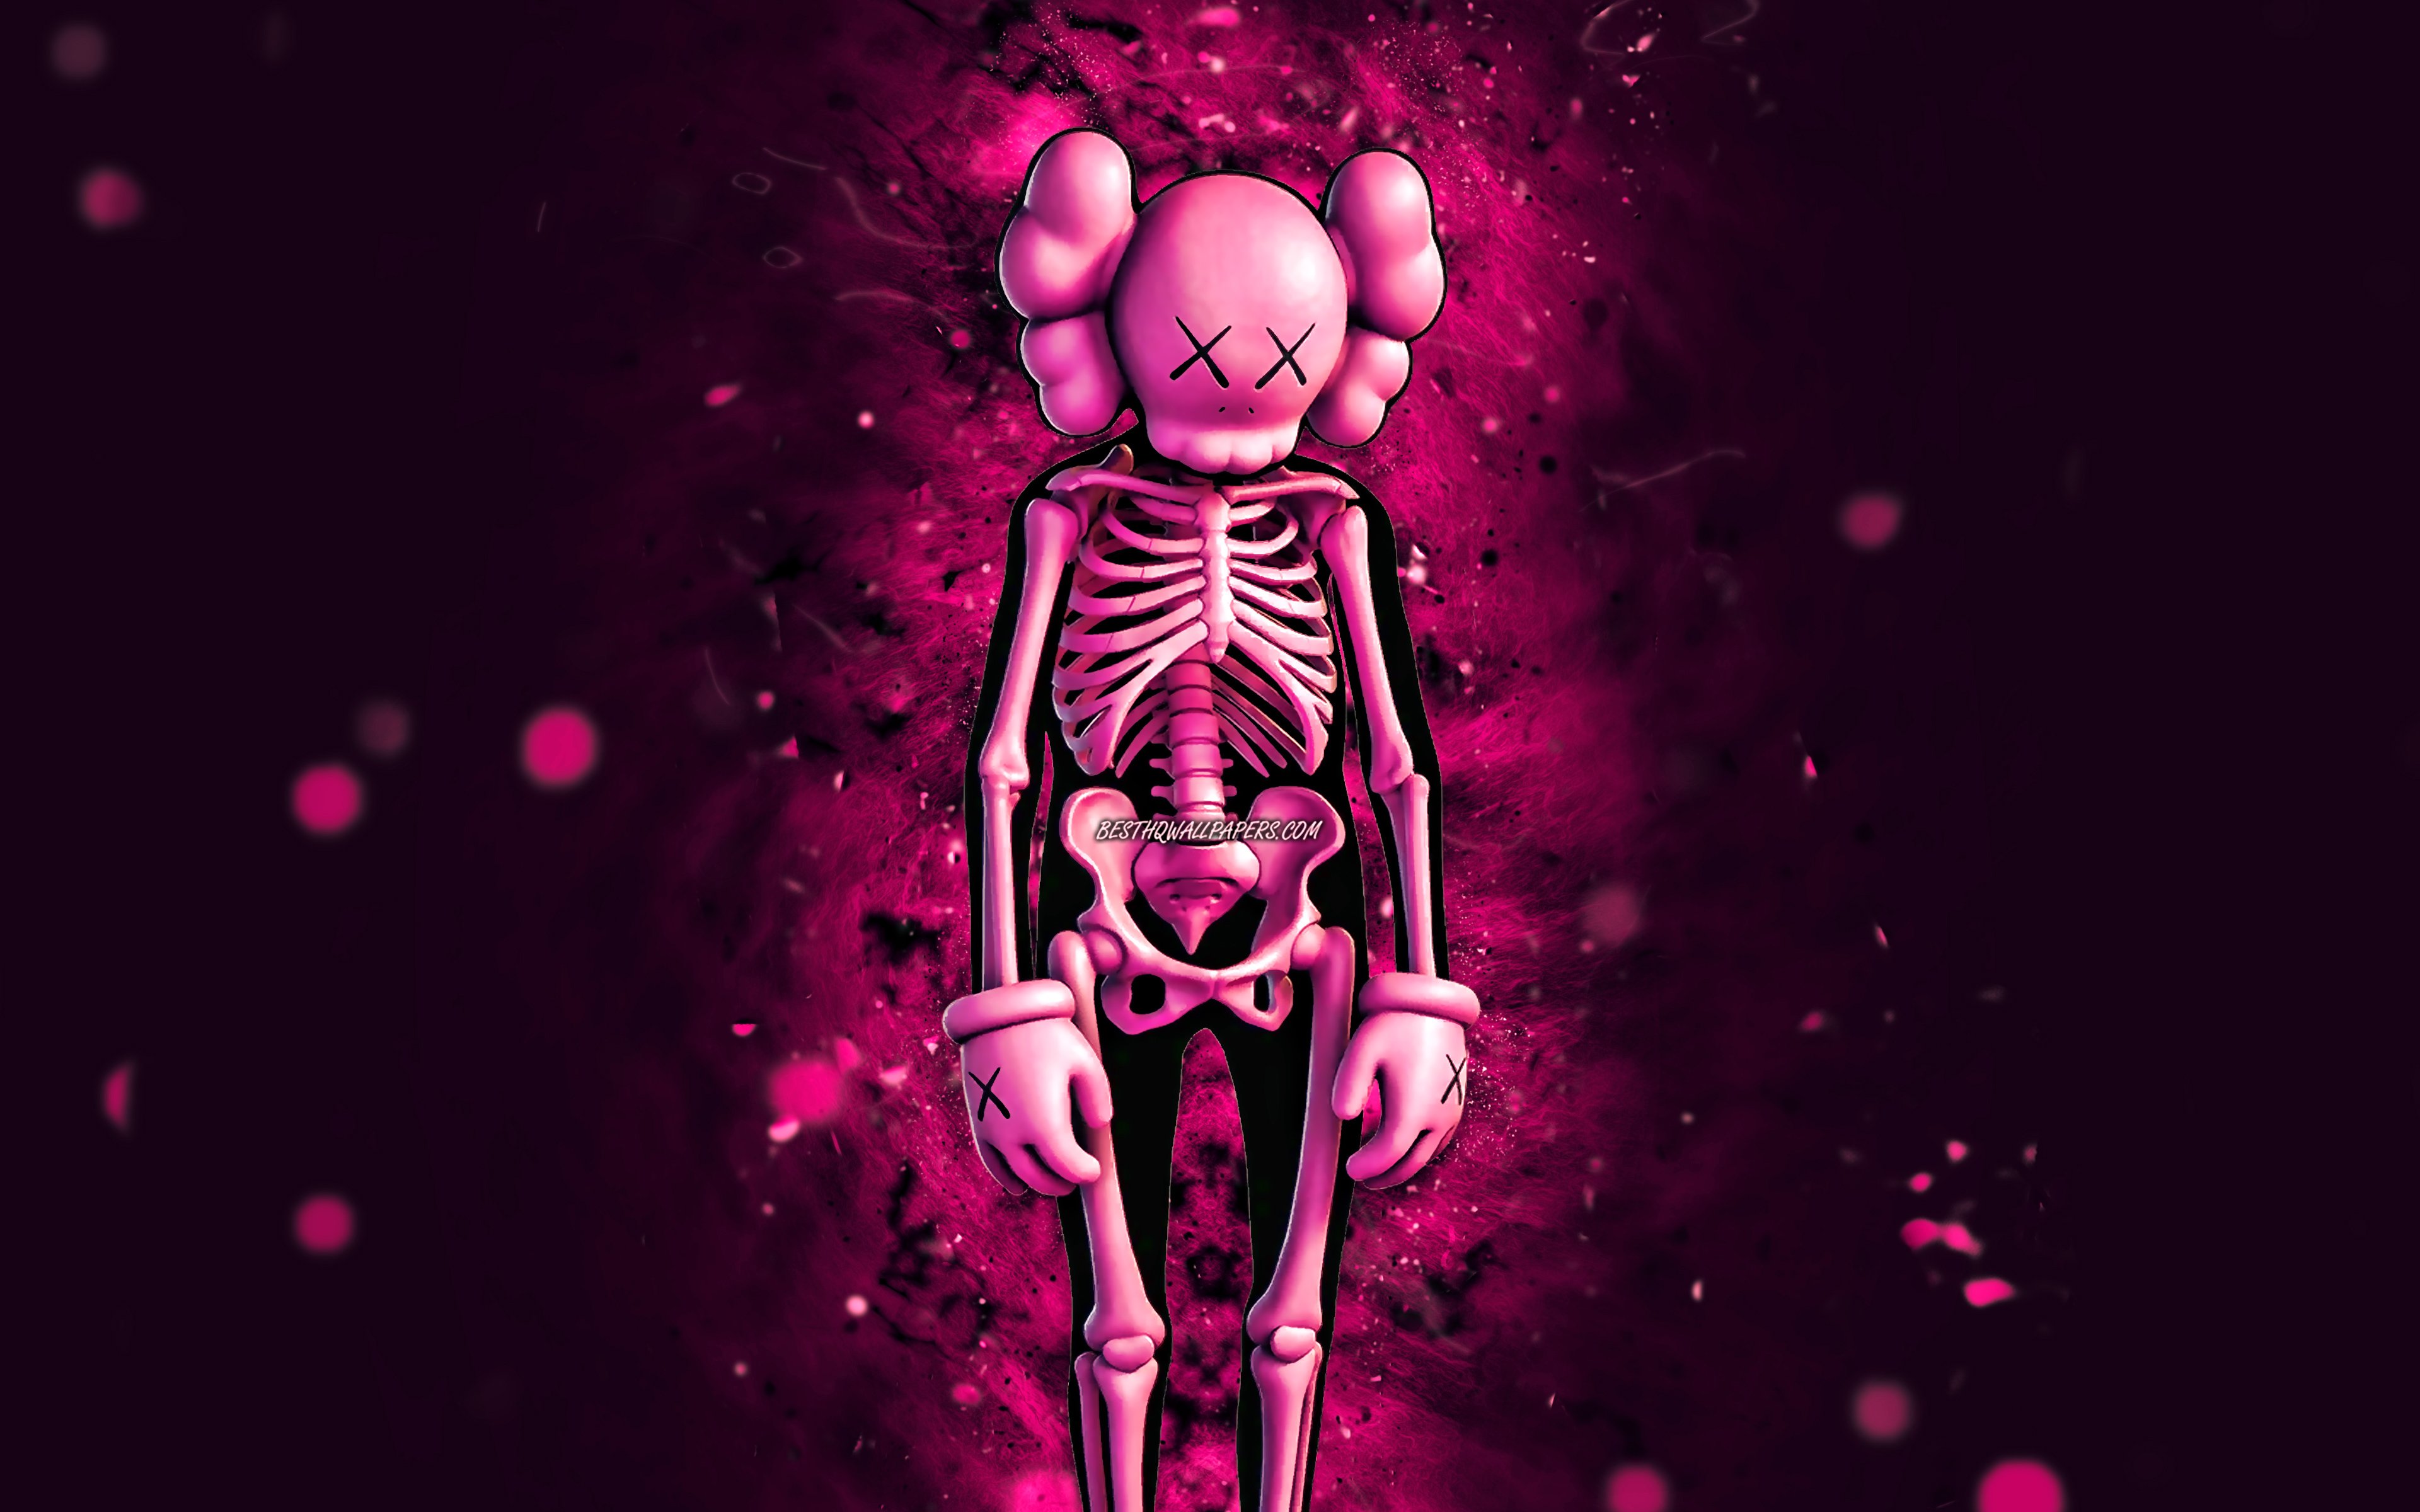 Download wallpaper Pink KAWS Skeleton, 4k, purple neon lights, Fortnite Battle Royale, Fortnite characters, Pink KAWS Skeleton Skin, Fortnite, Pink KAWS Skeleton Fortnite for desktop with resolution 3840x2400. High Quality HD picture